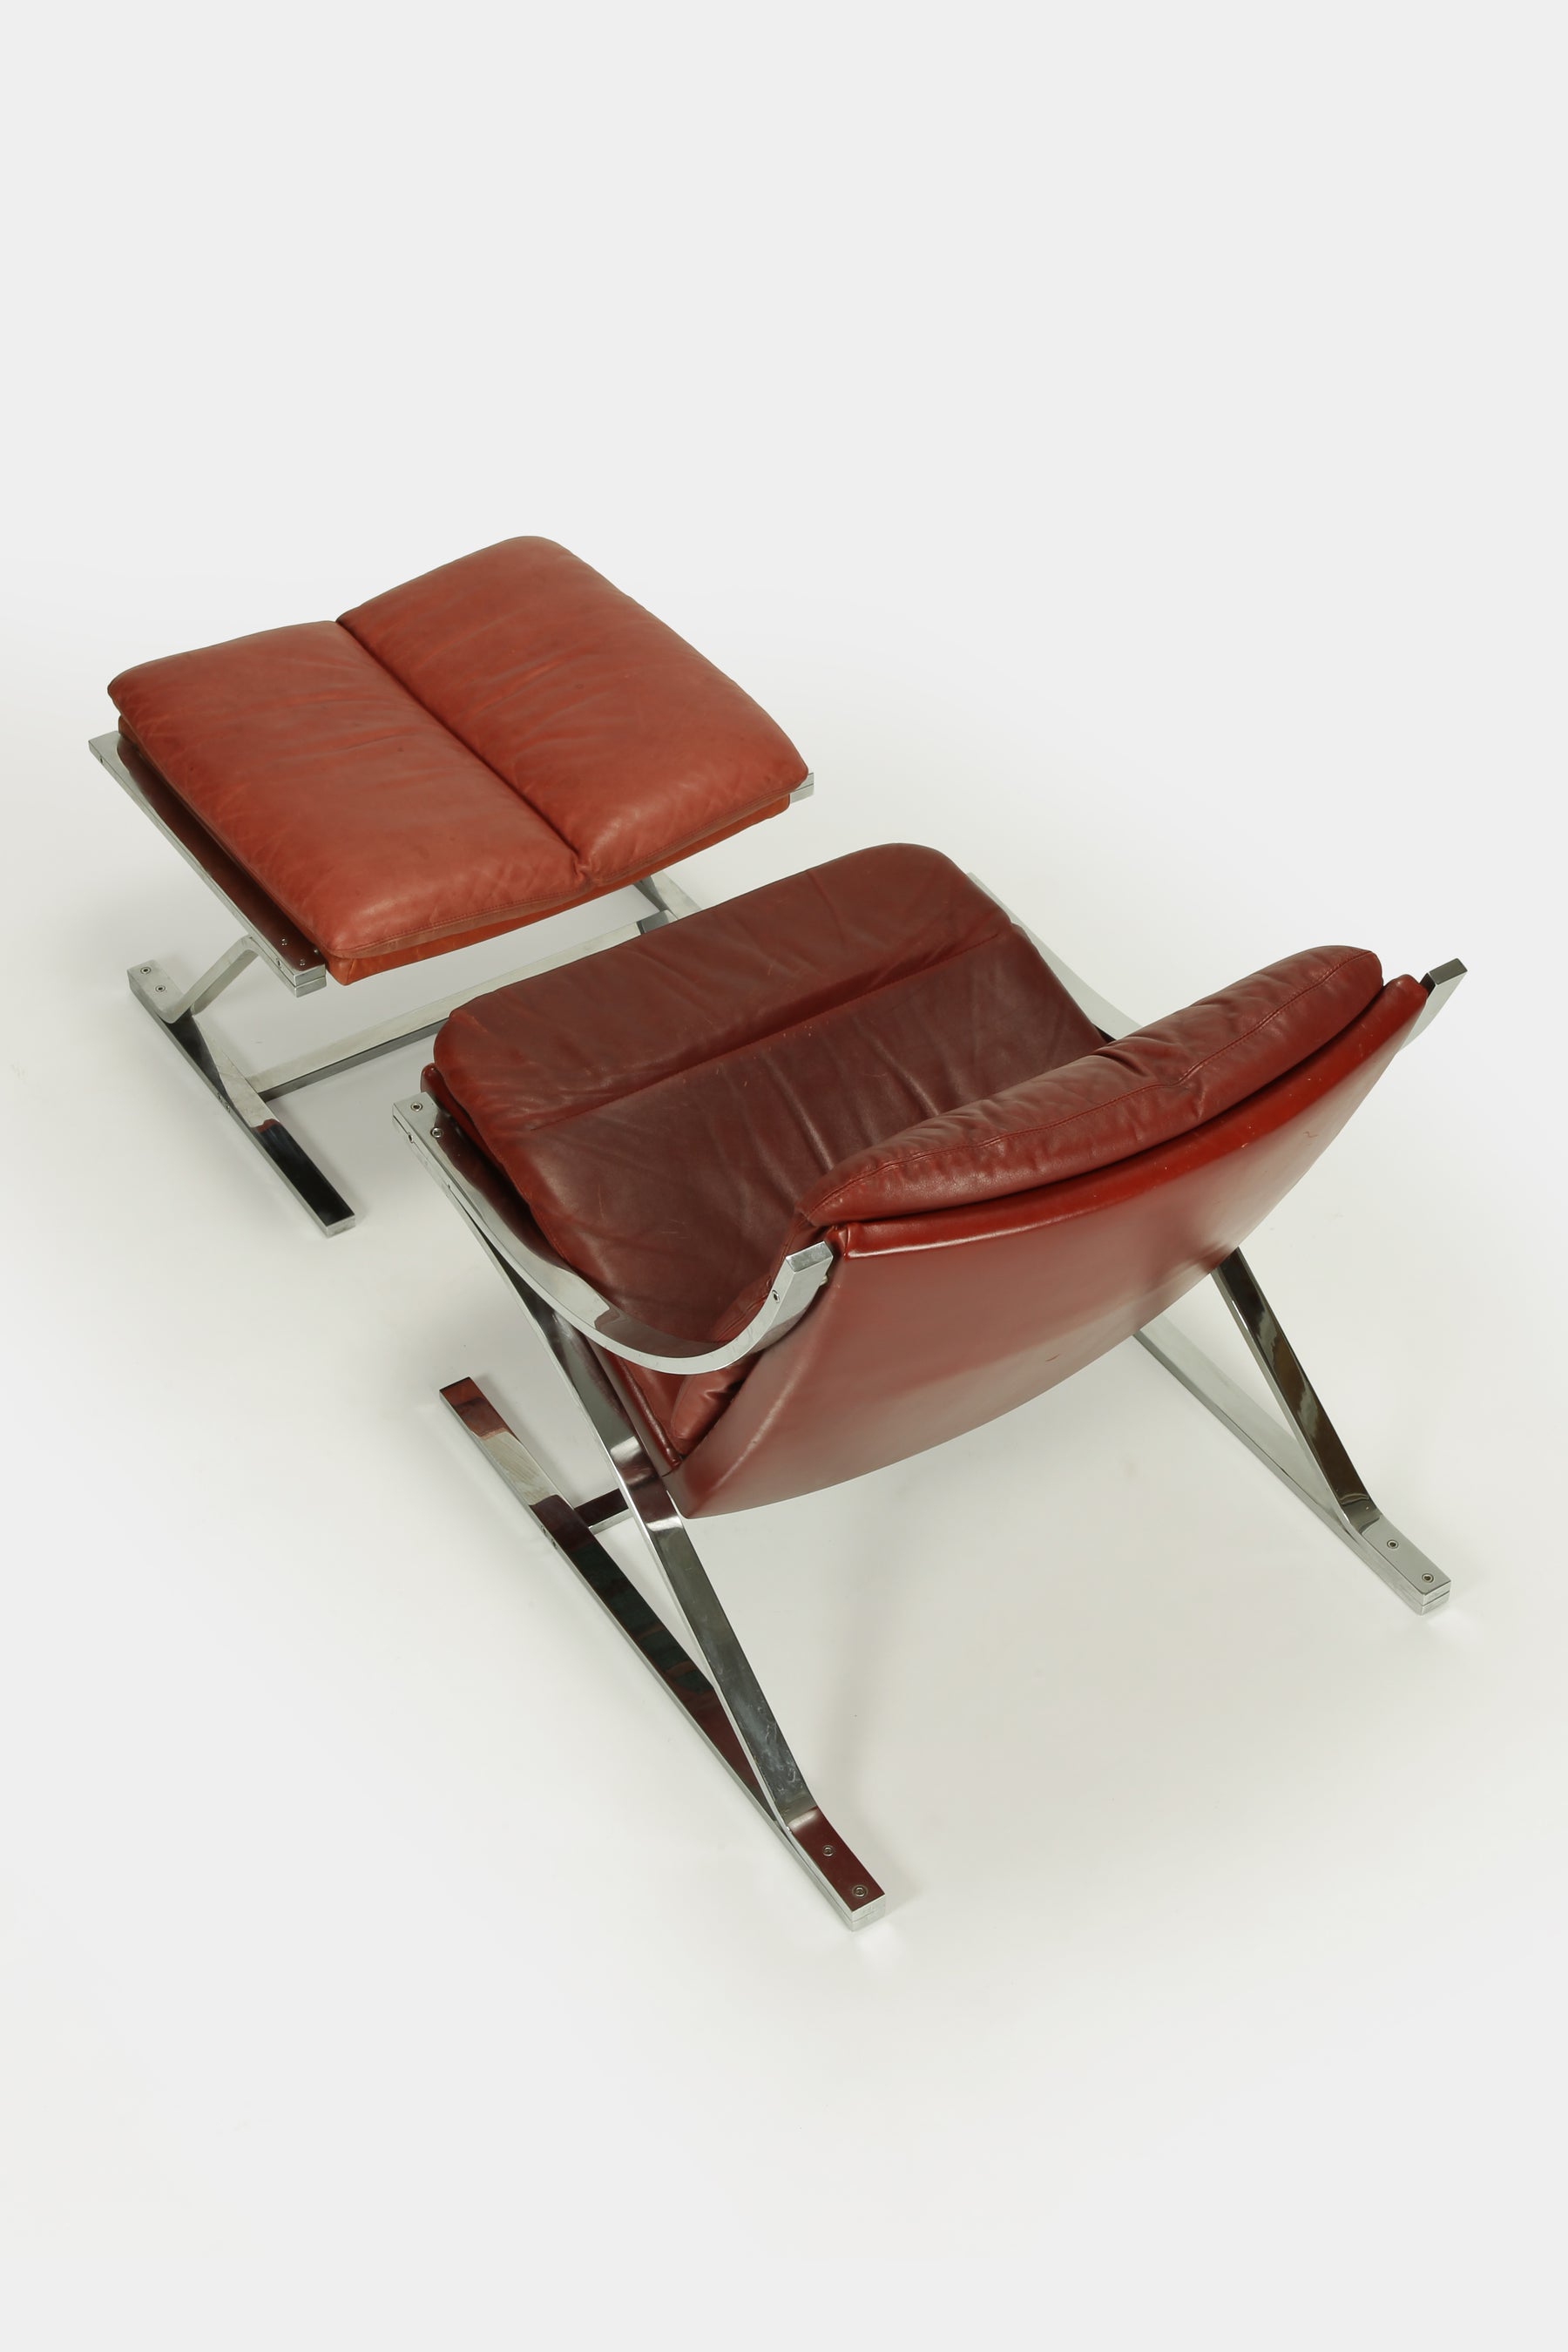 2x Paul Tuttle Zeta Chair with Ottoman Strässle, 70s